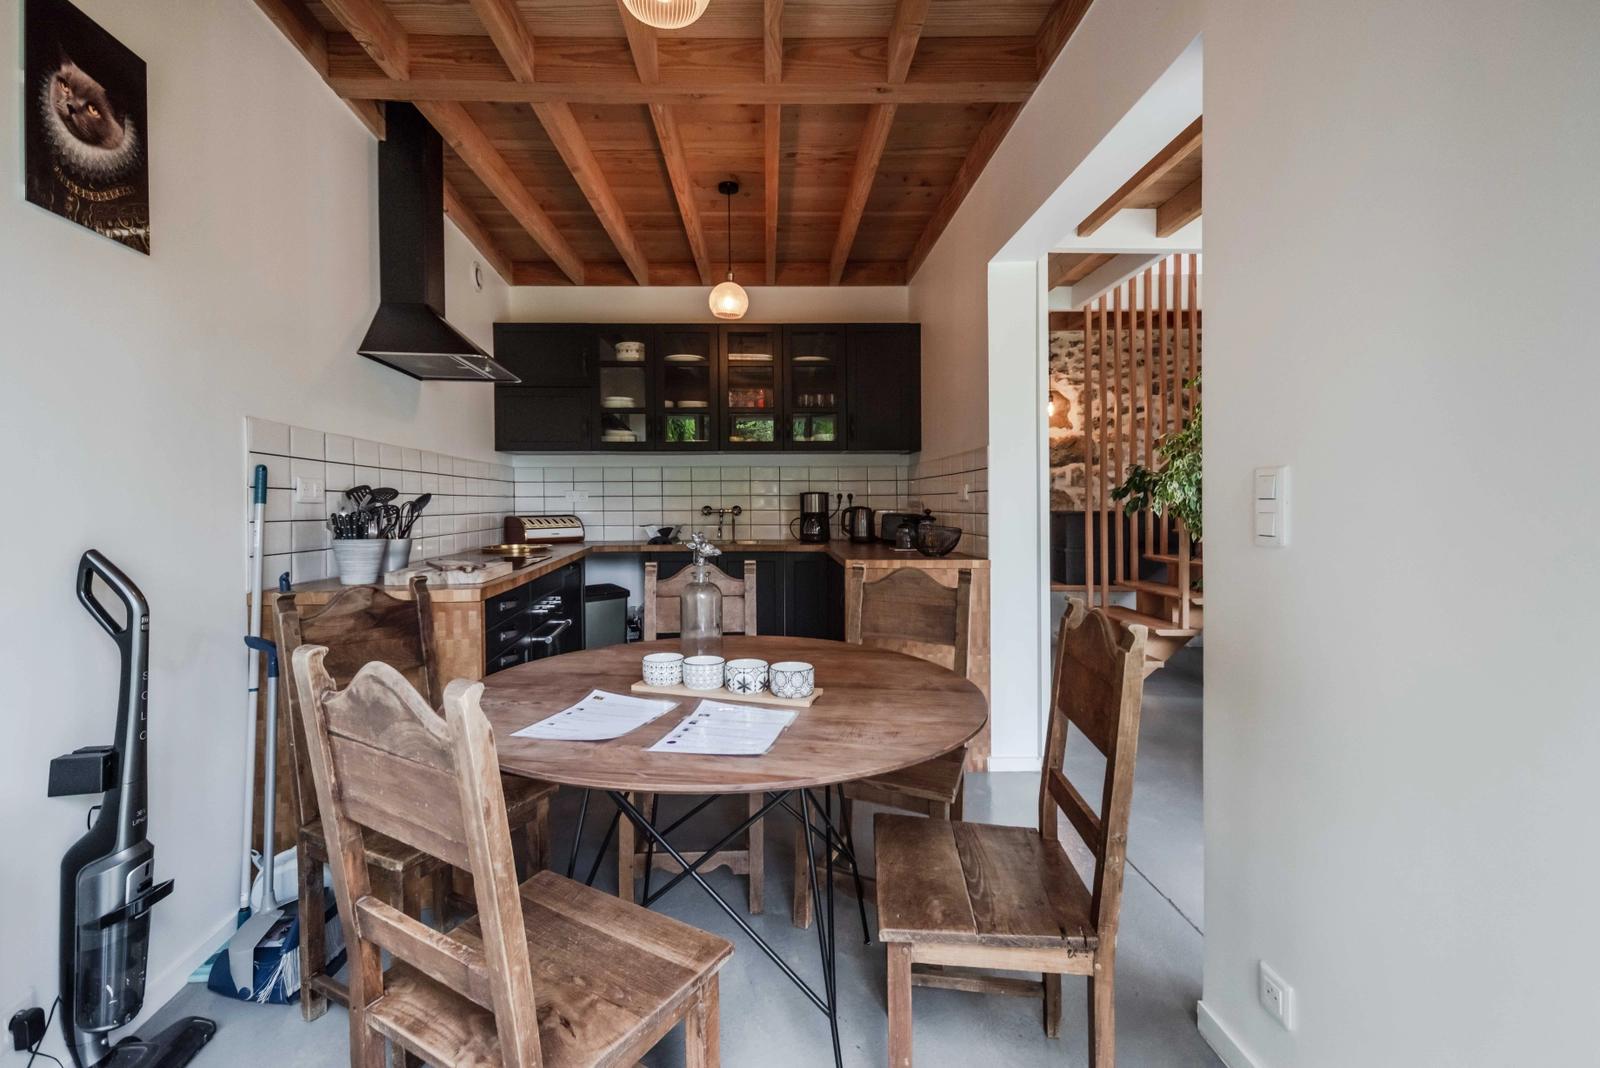 Comedor dentro Casa "loft" de madera diseñada por un arquitecto cerca de París - 4